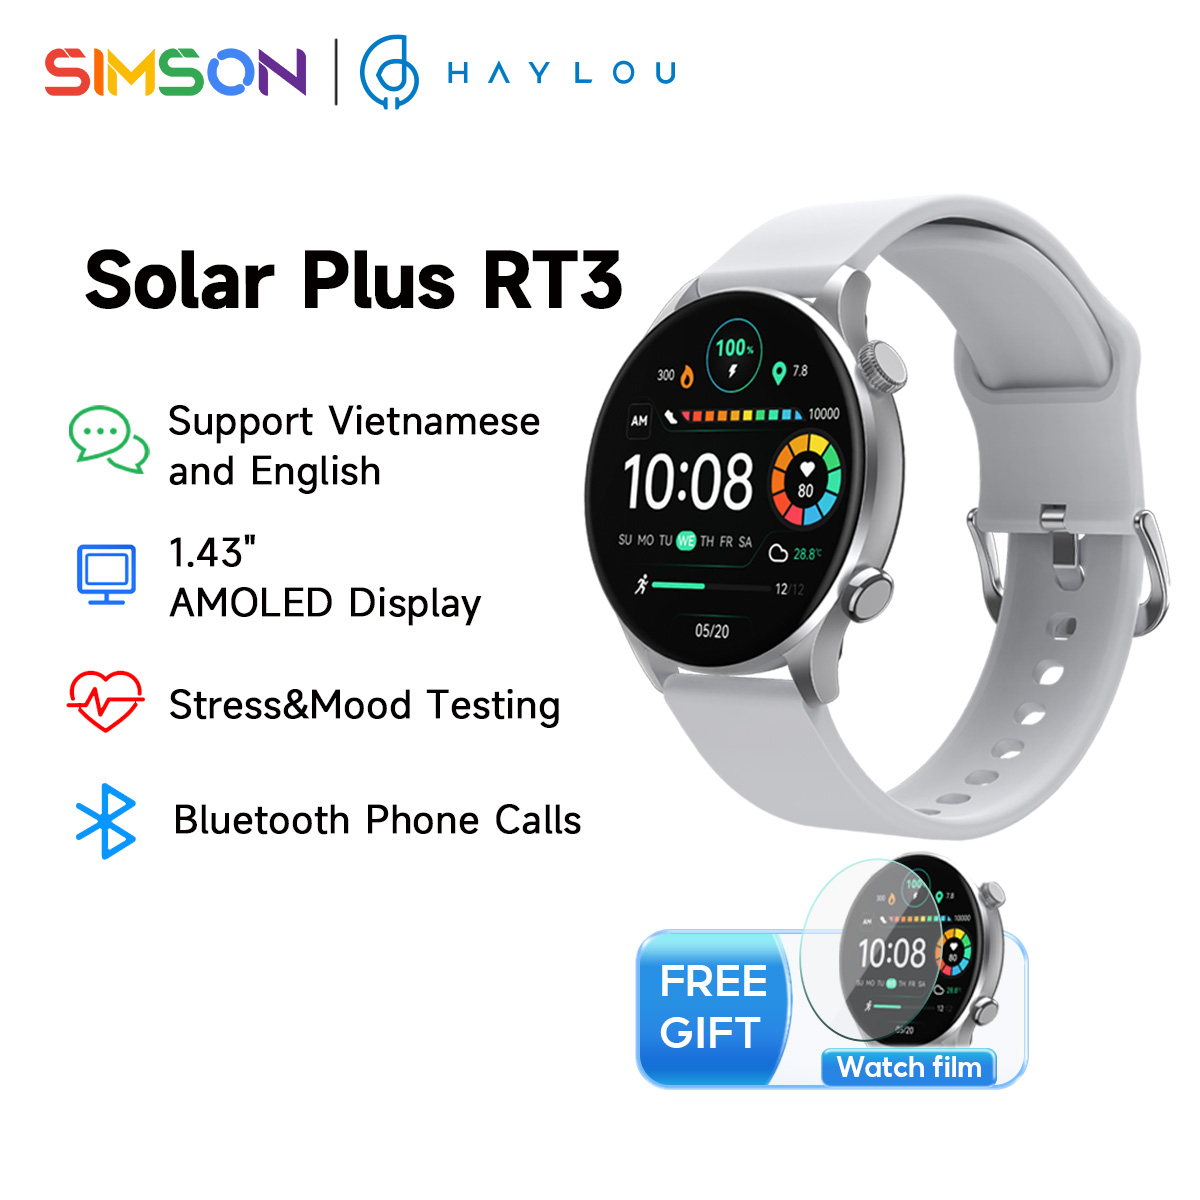 SmartWatch Haylou LS16 Solar Plus RT3 Bluetooth Phone Calls Stress&Mood